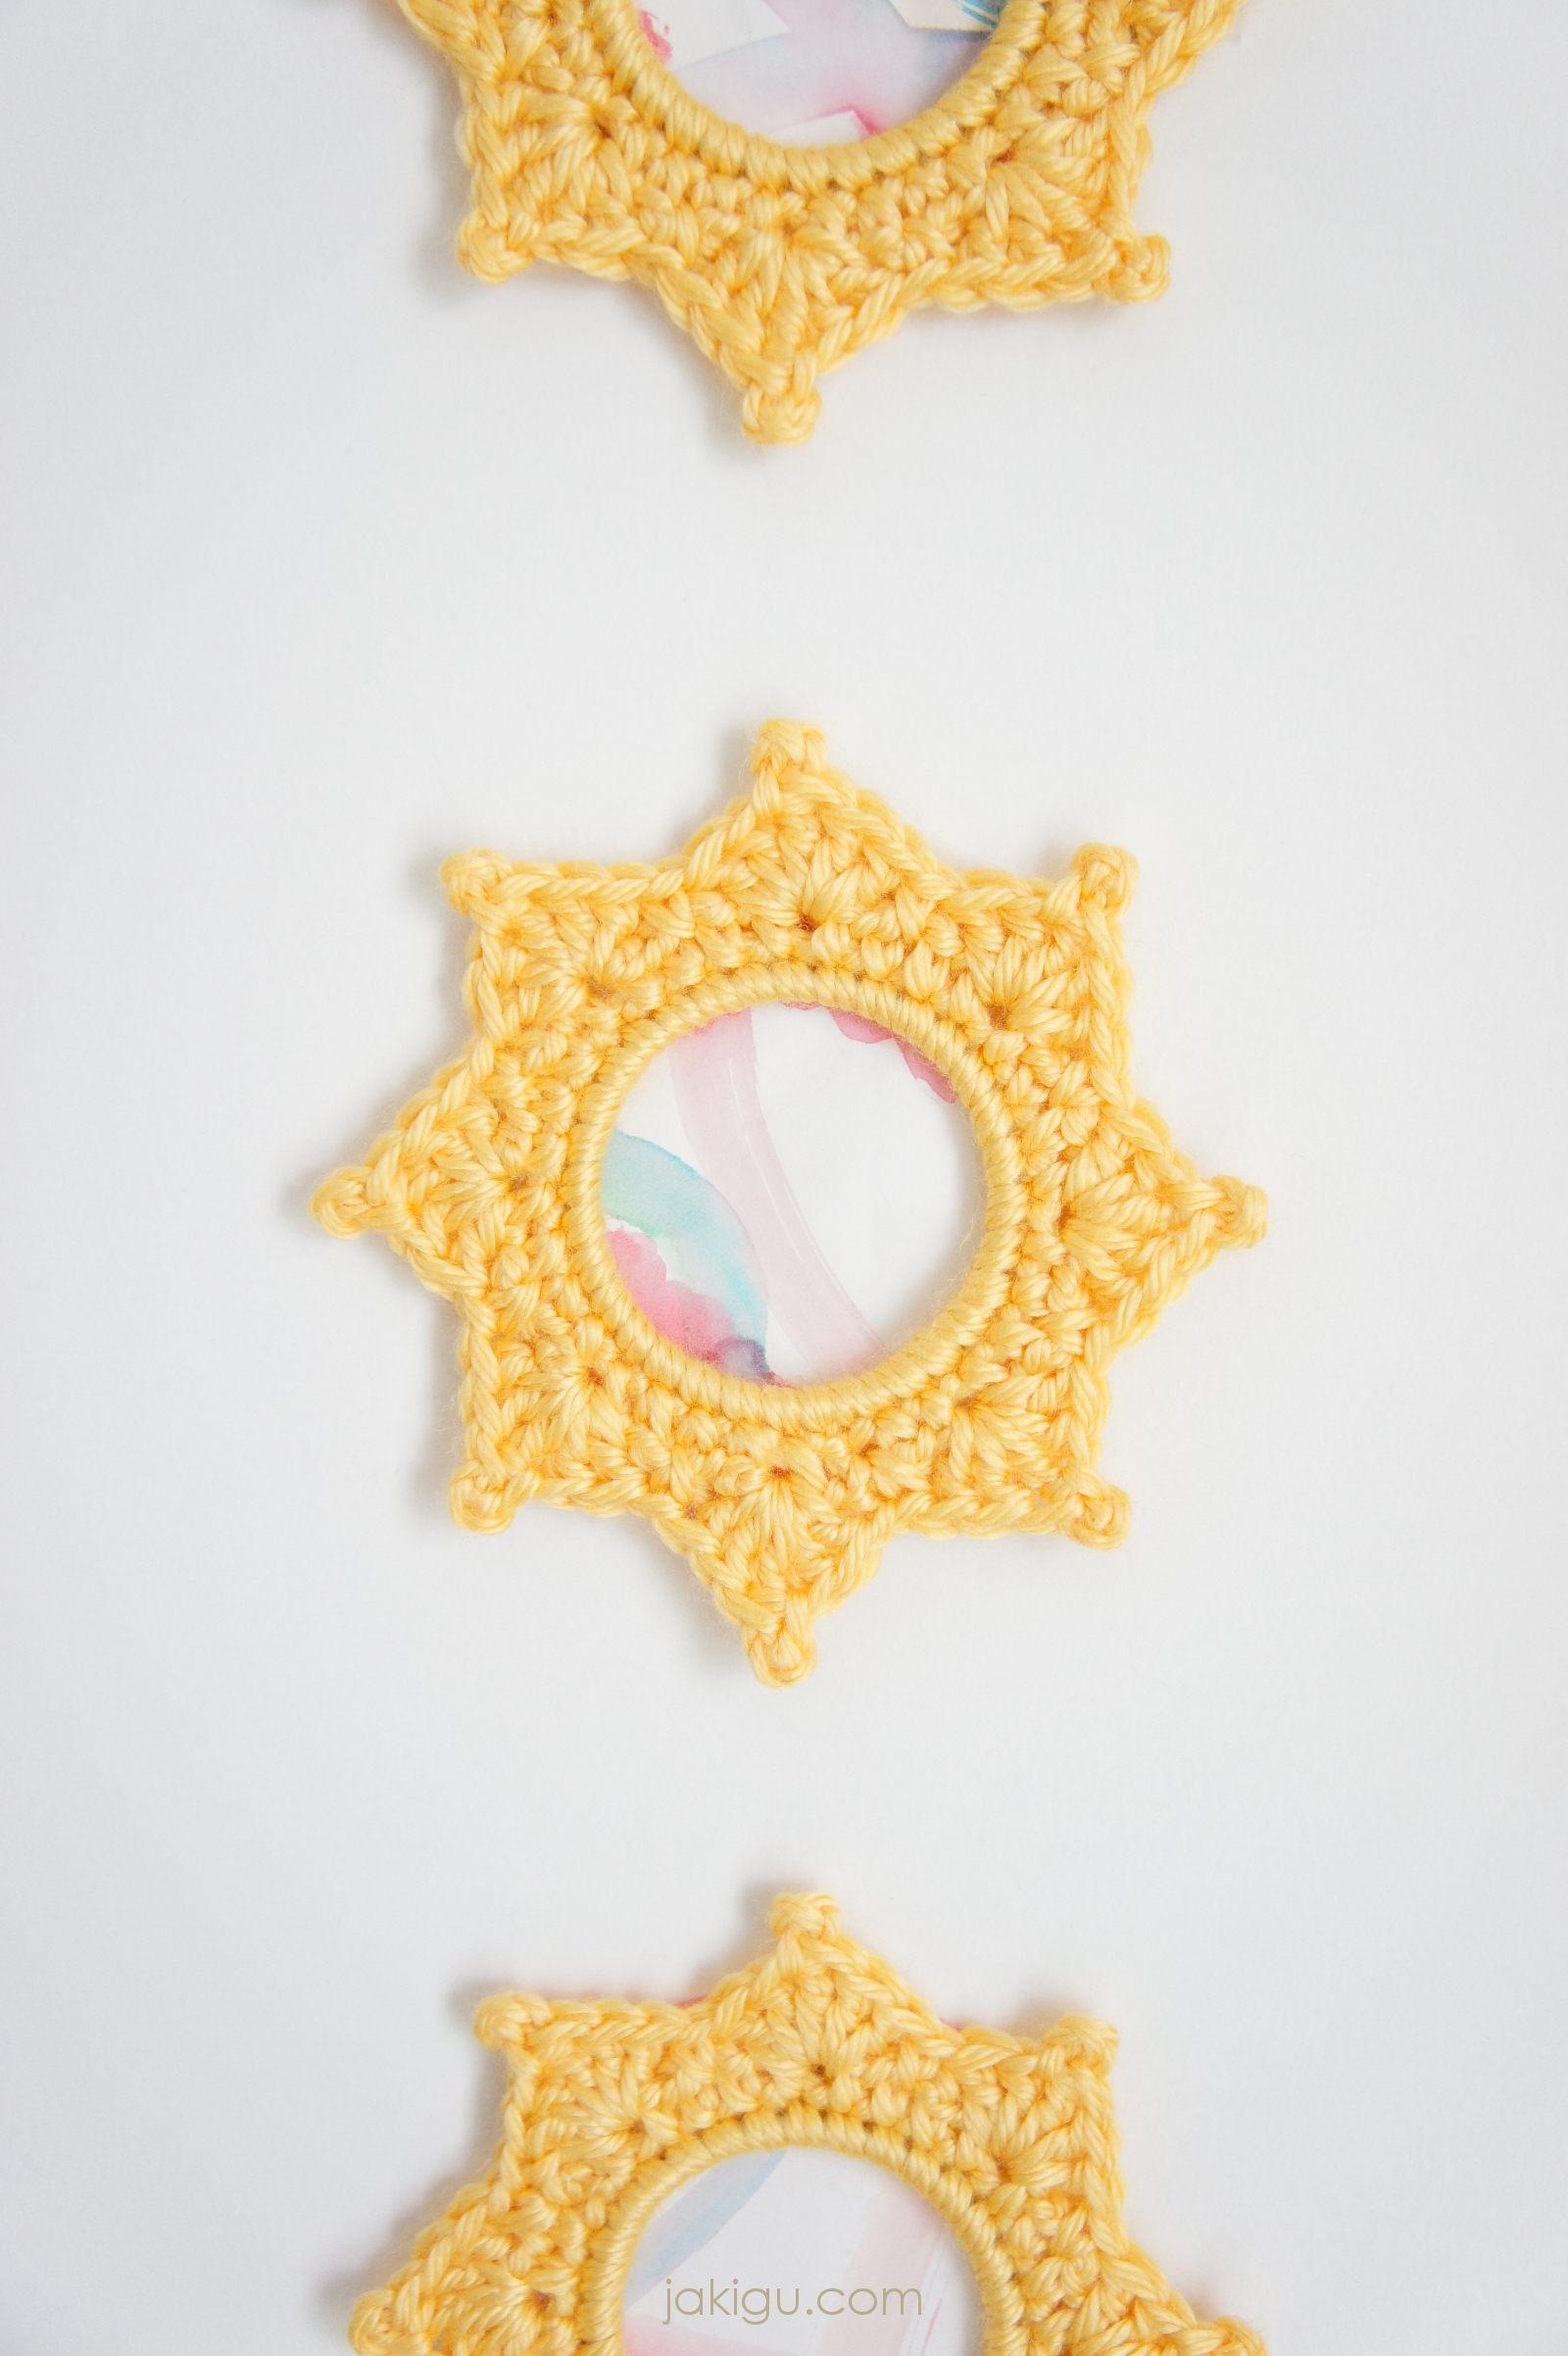  9. Crochet Picture Frame Design